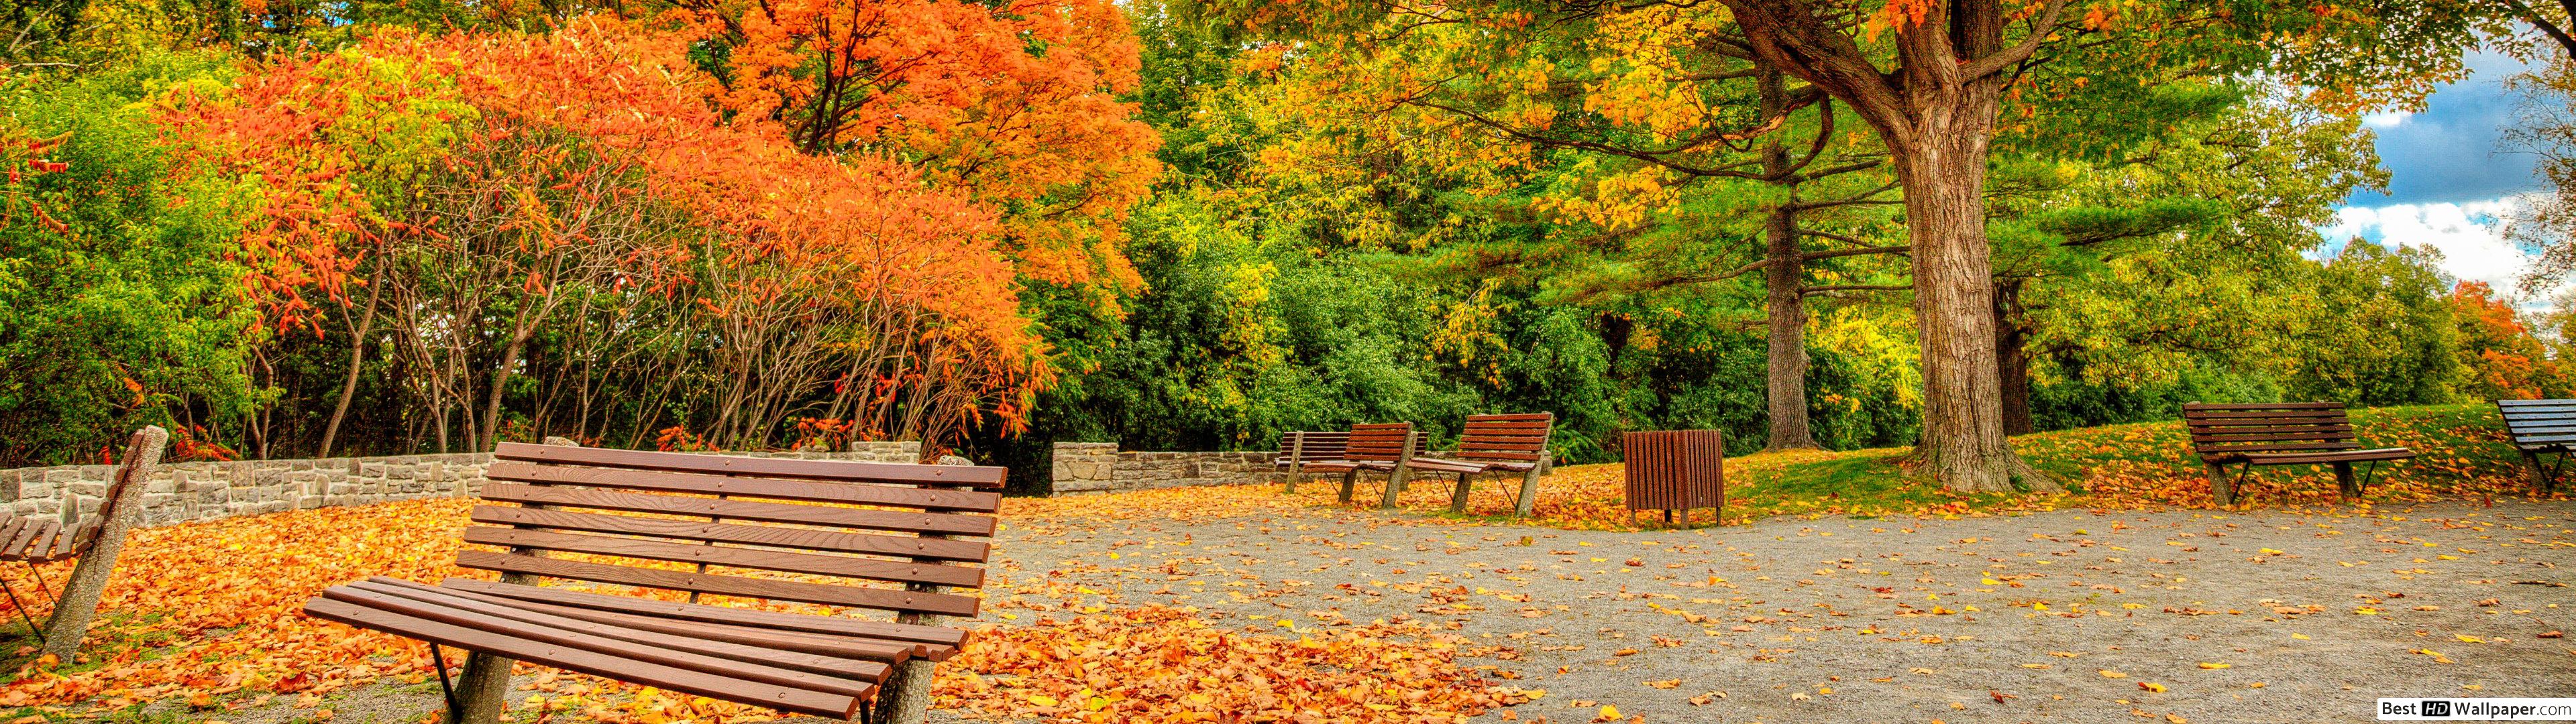 Bench in Autumn Park HD wallpaper download